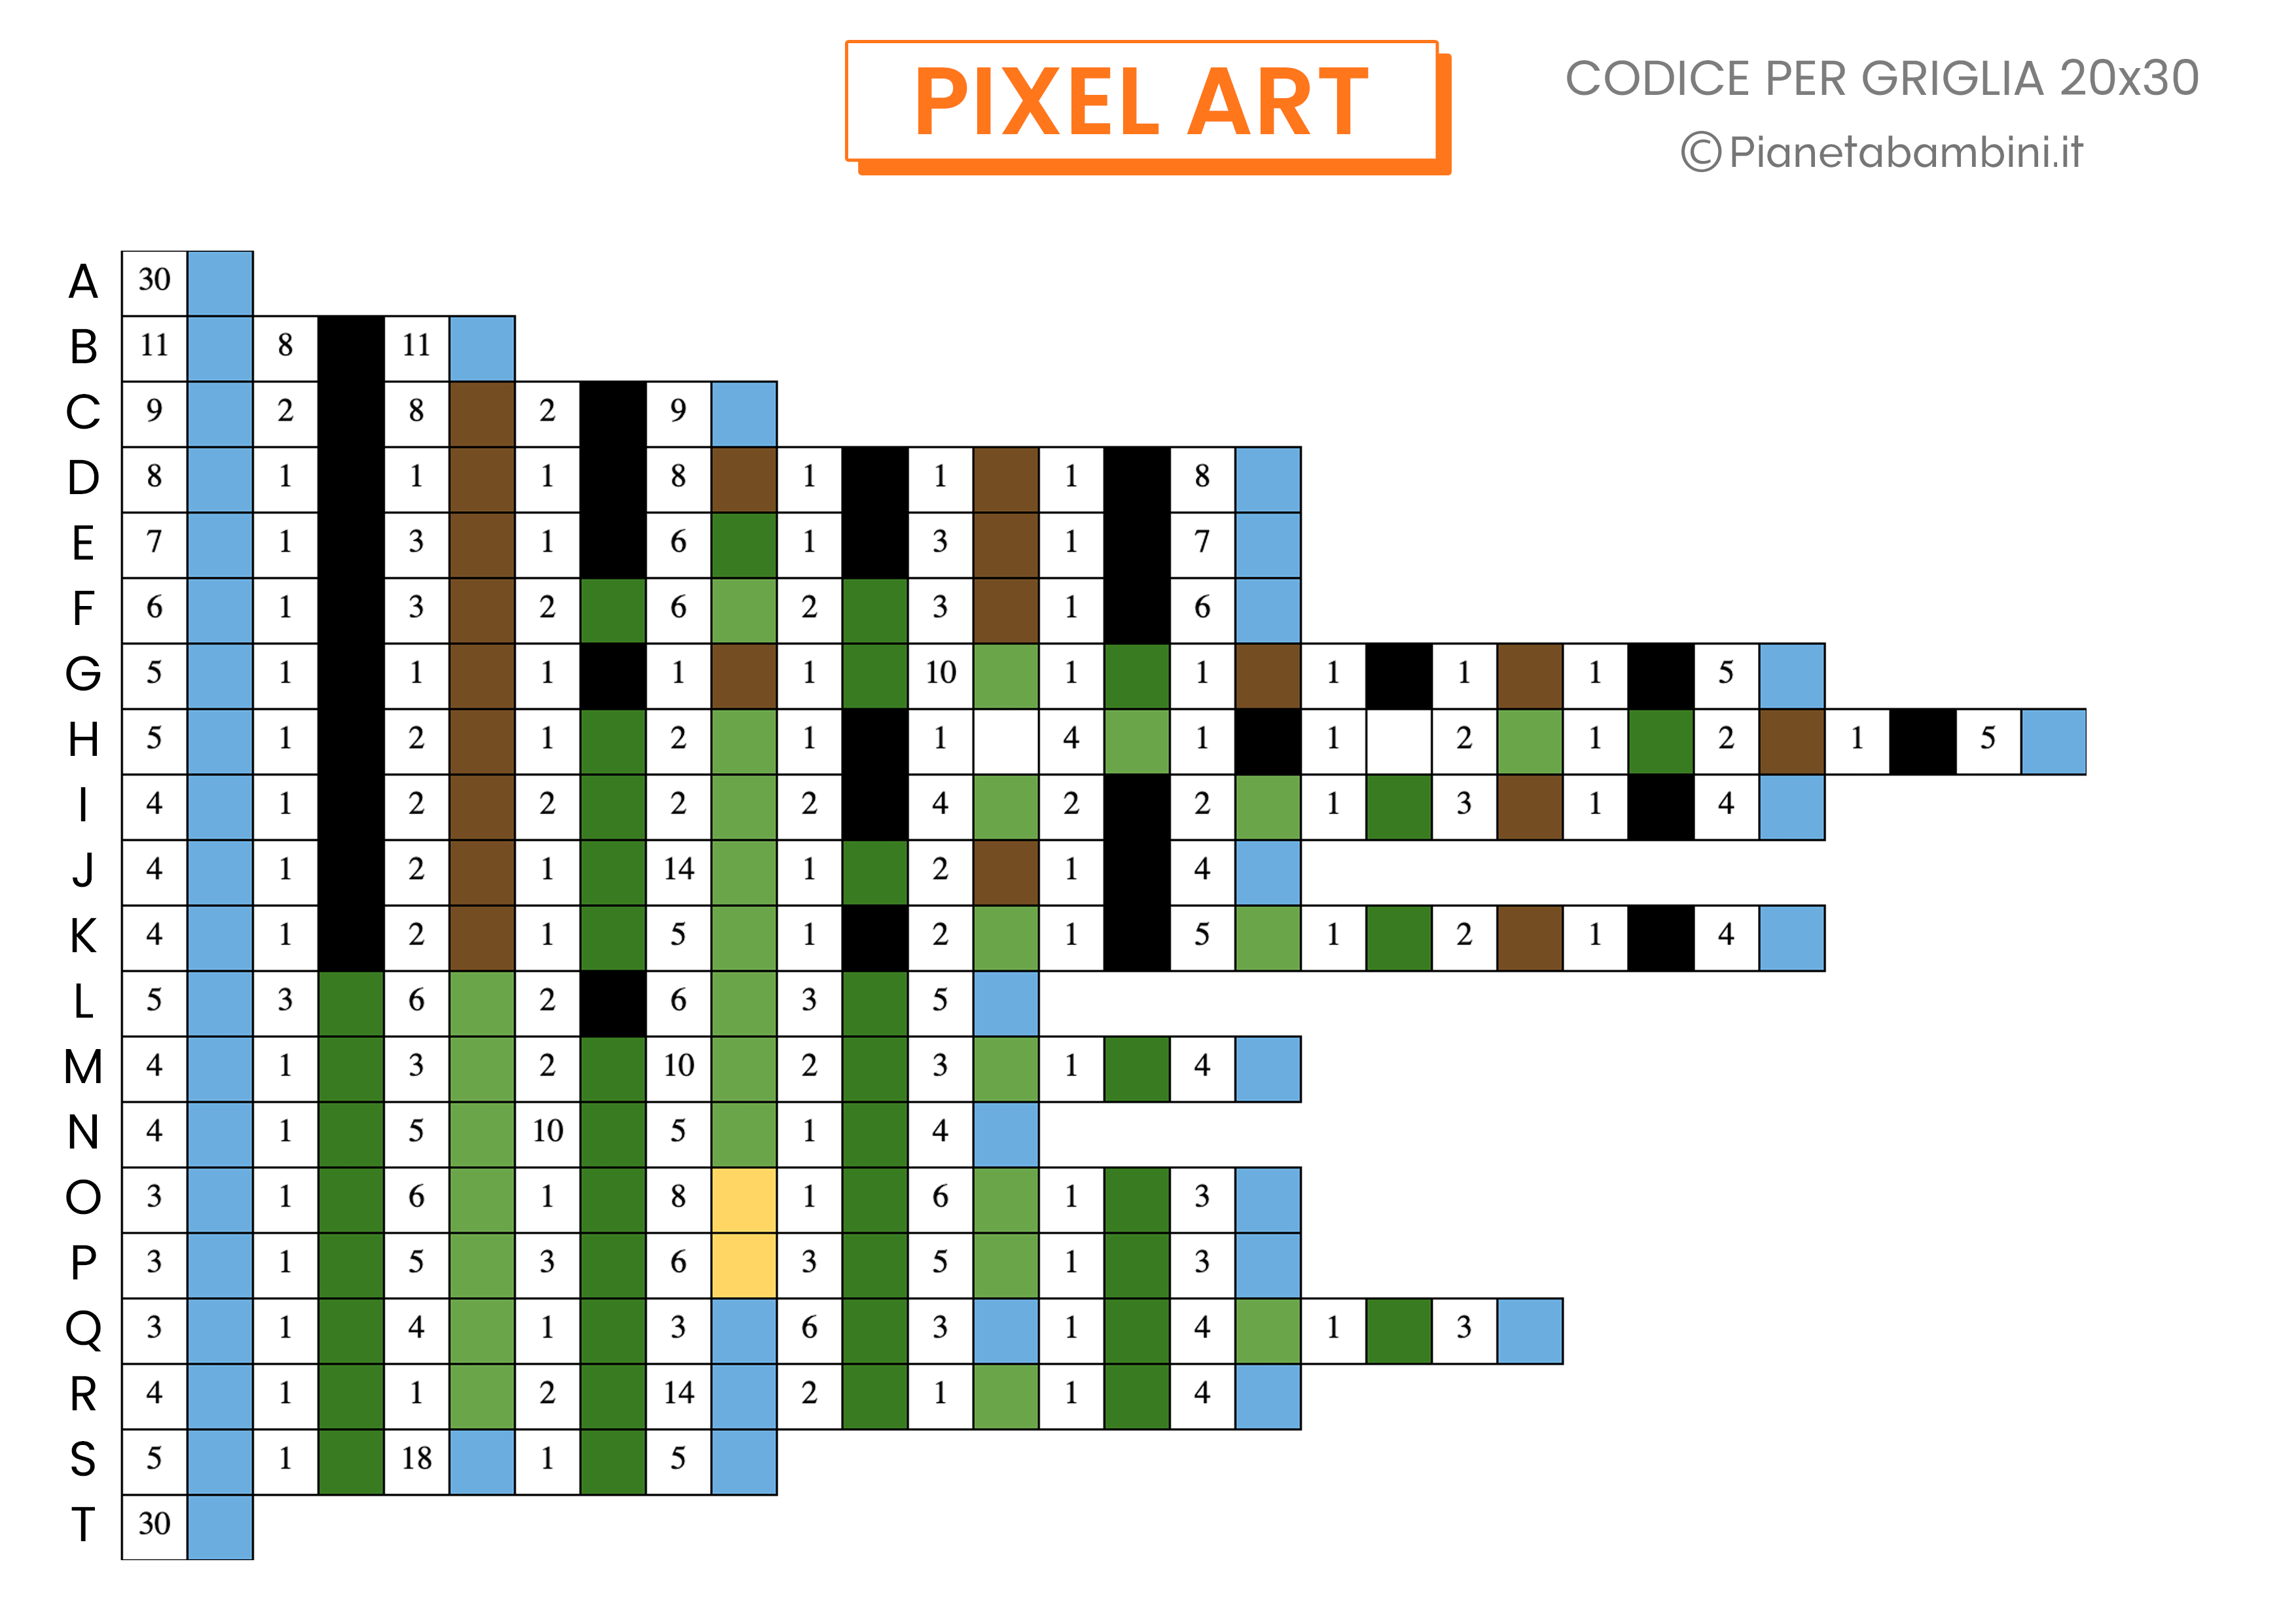 Pixel Art estate codice difficile 02